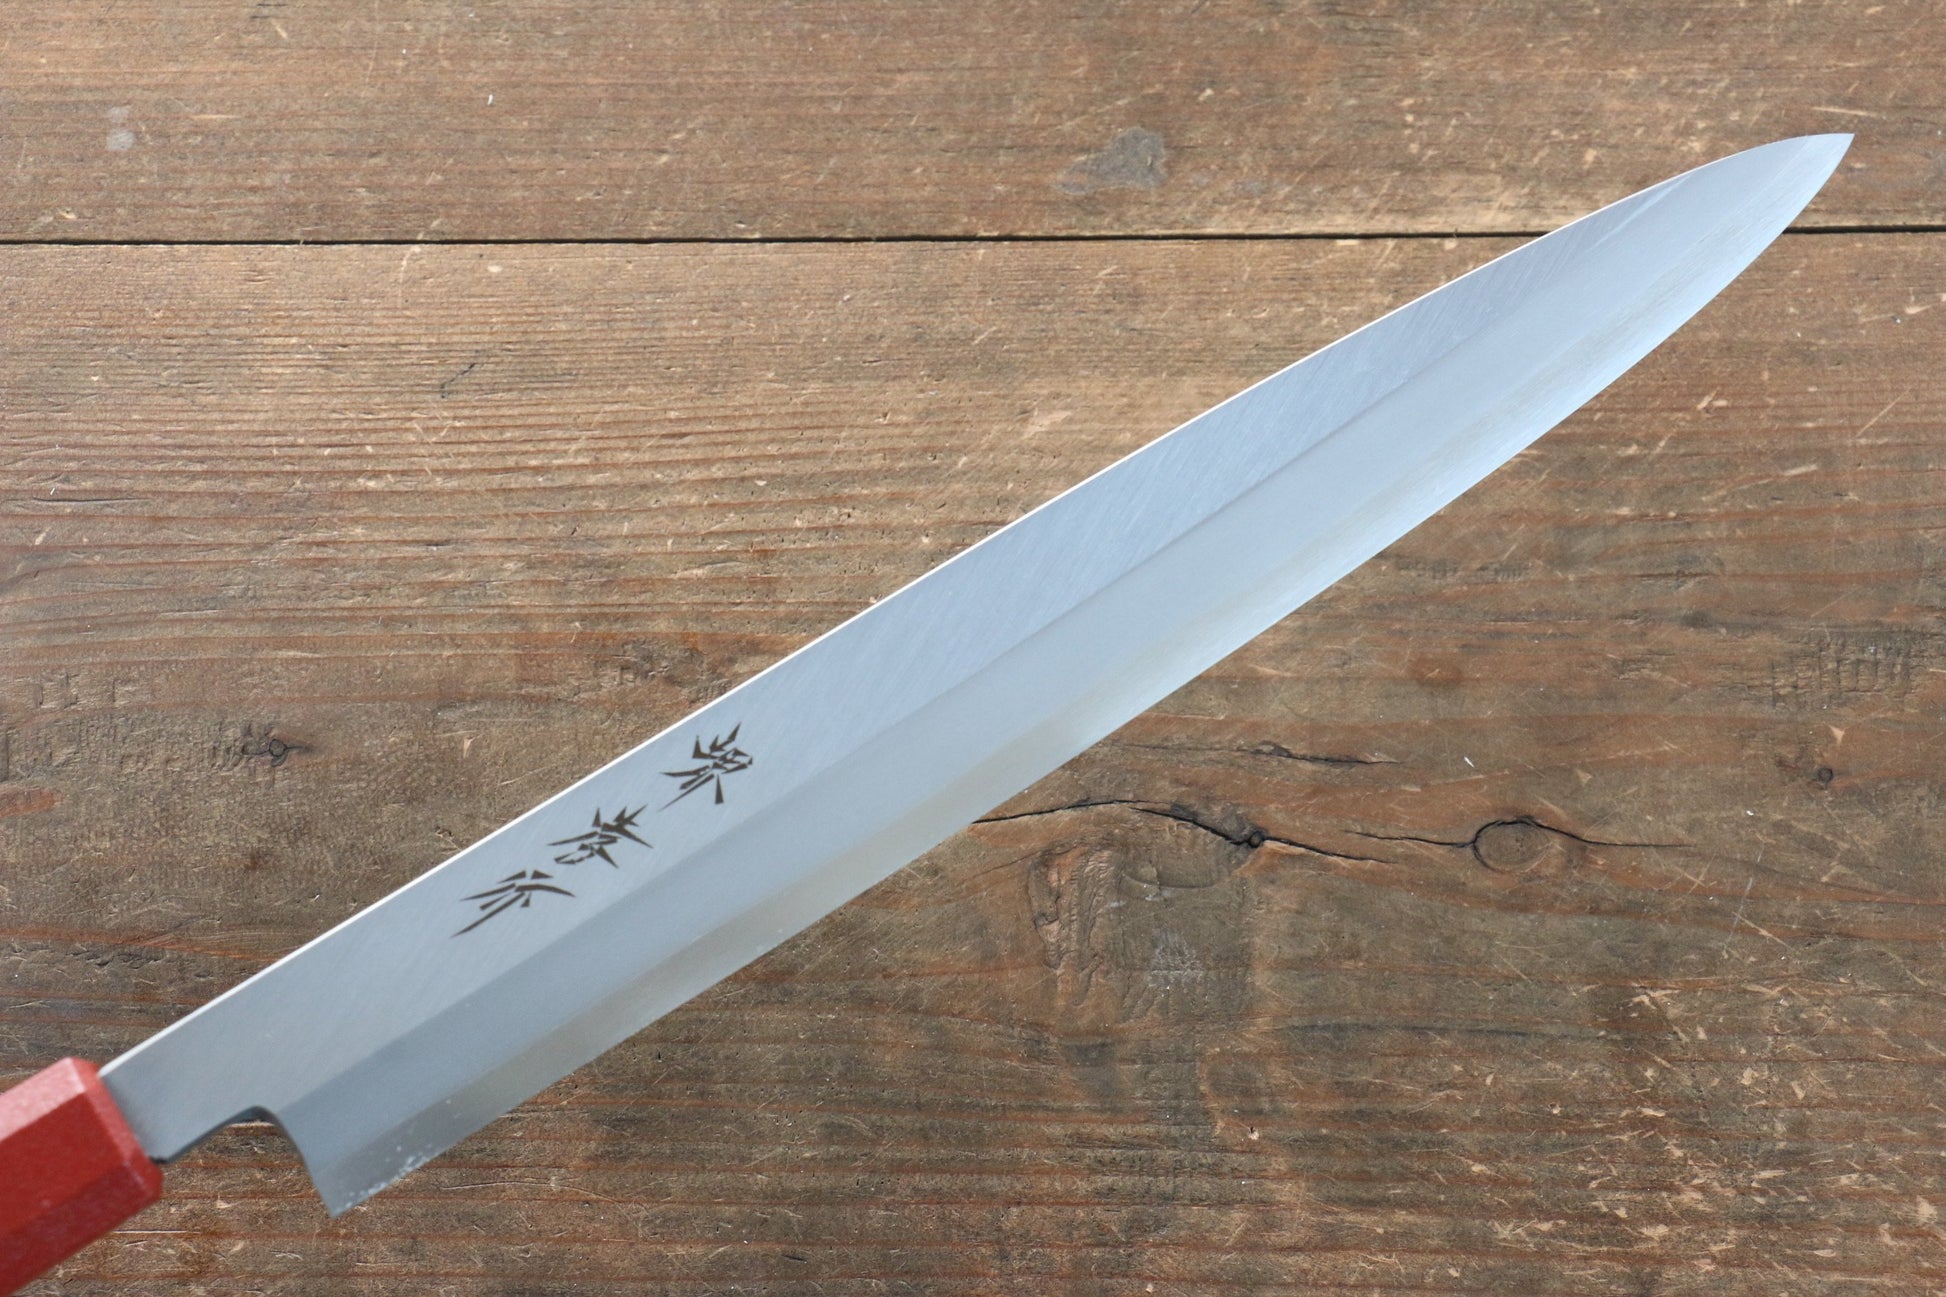 Sakai Takayuki Sakai Takayuki Nanairo INOX Molybdenum Yanagiba Japanese Knife 270mm with ABS resin(Red pearl) Handle - Japanny - Best Japanese Knife